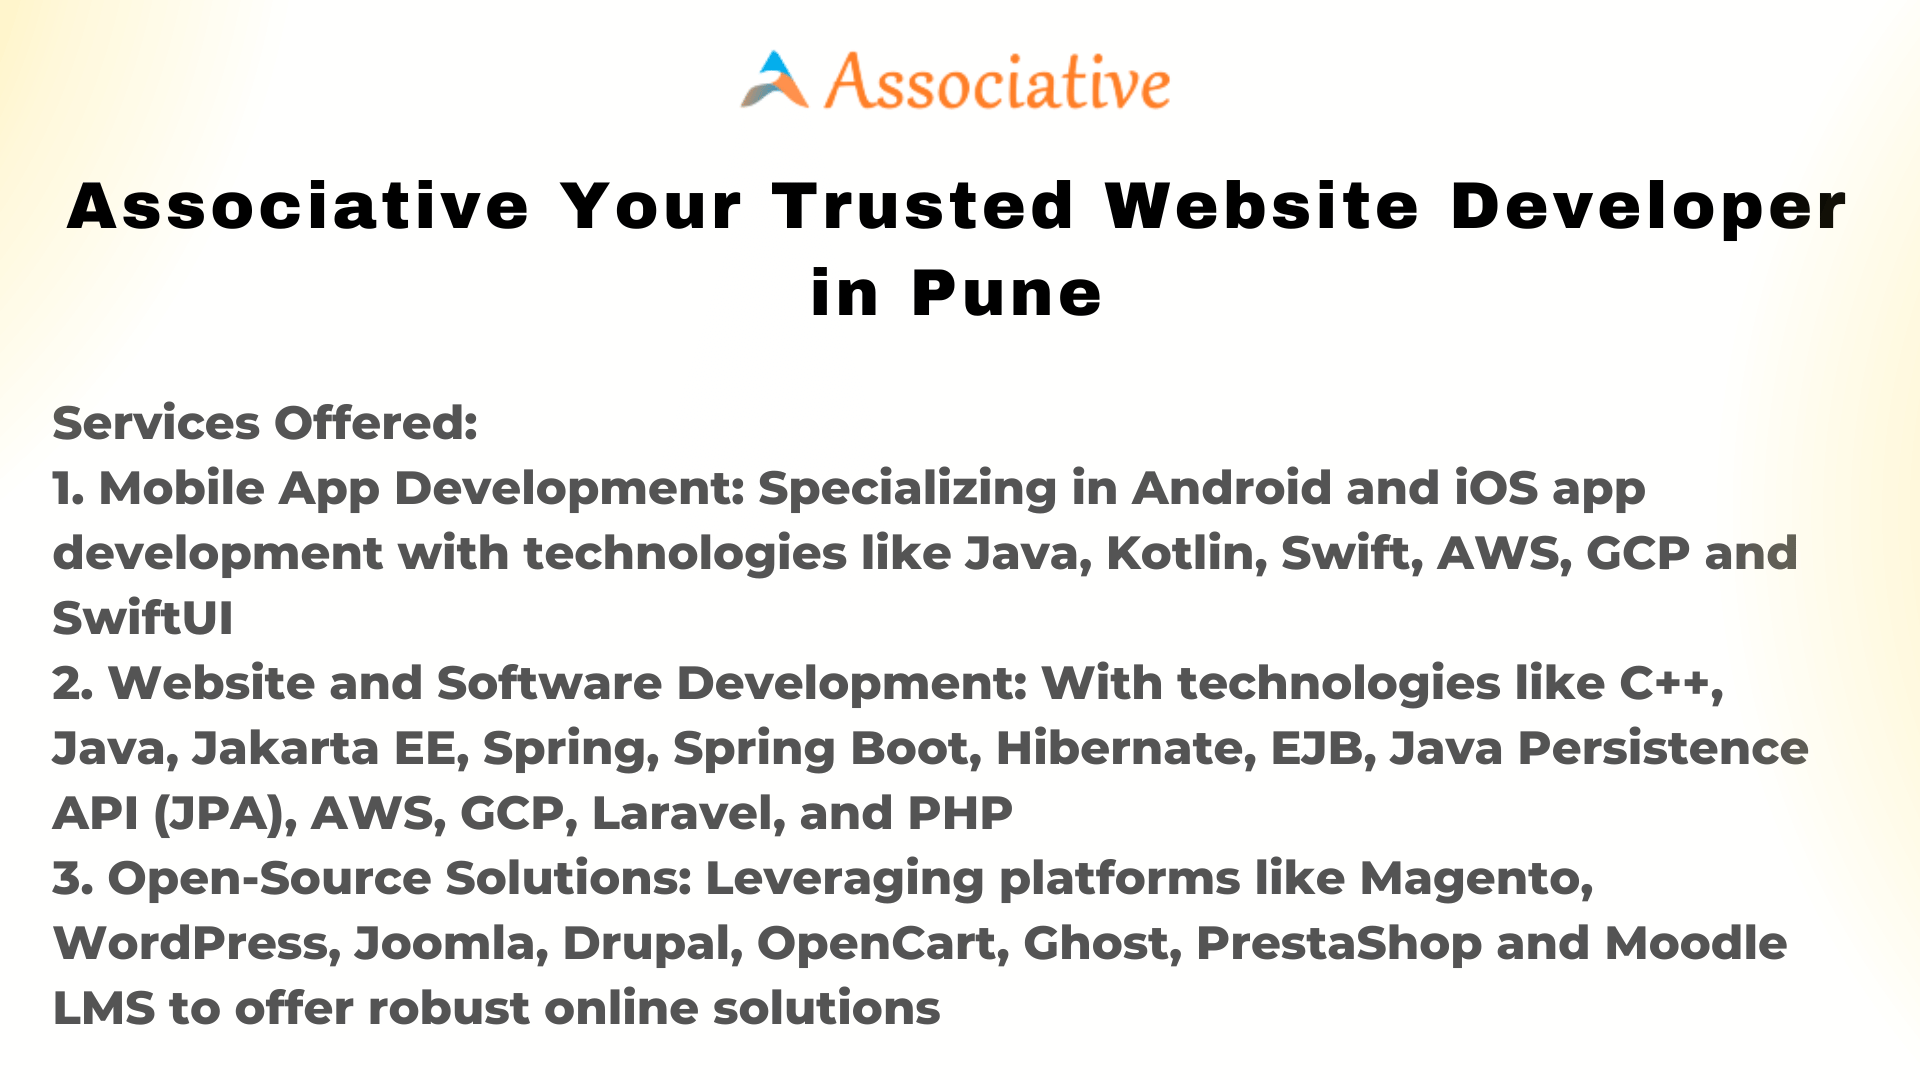 Associative Your Trusted Website Developer in Pune